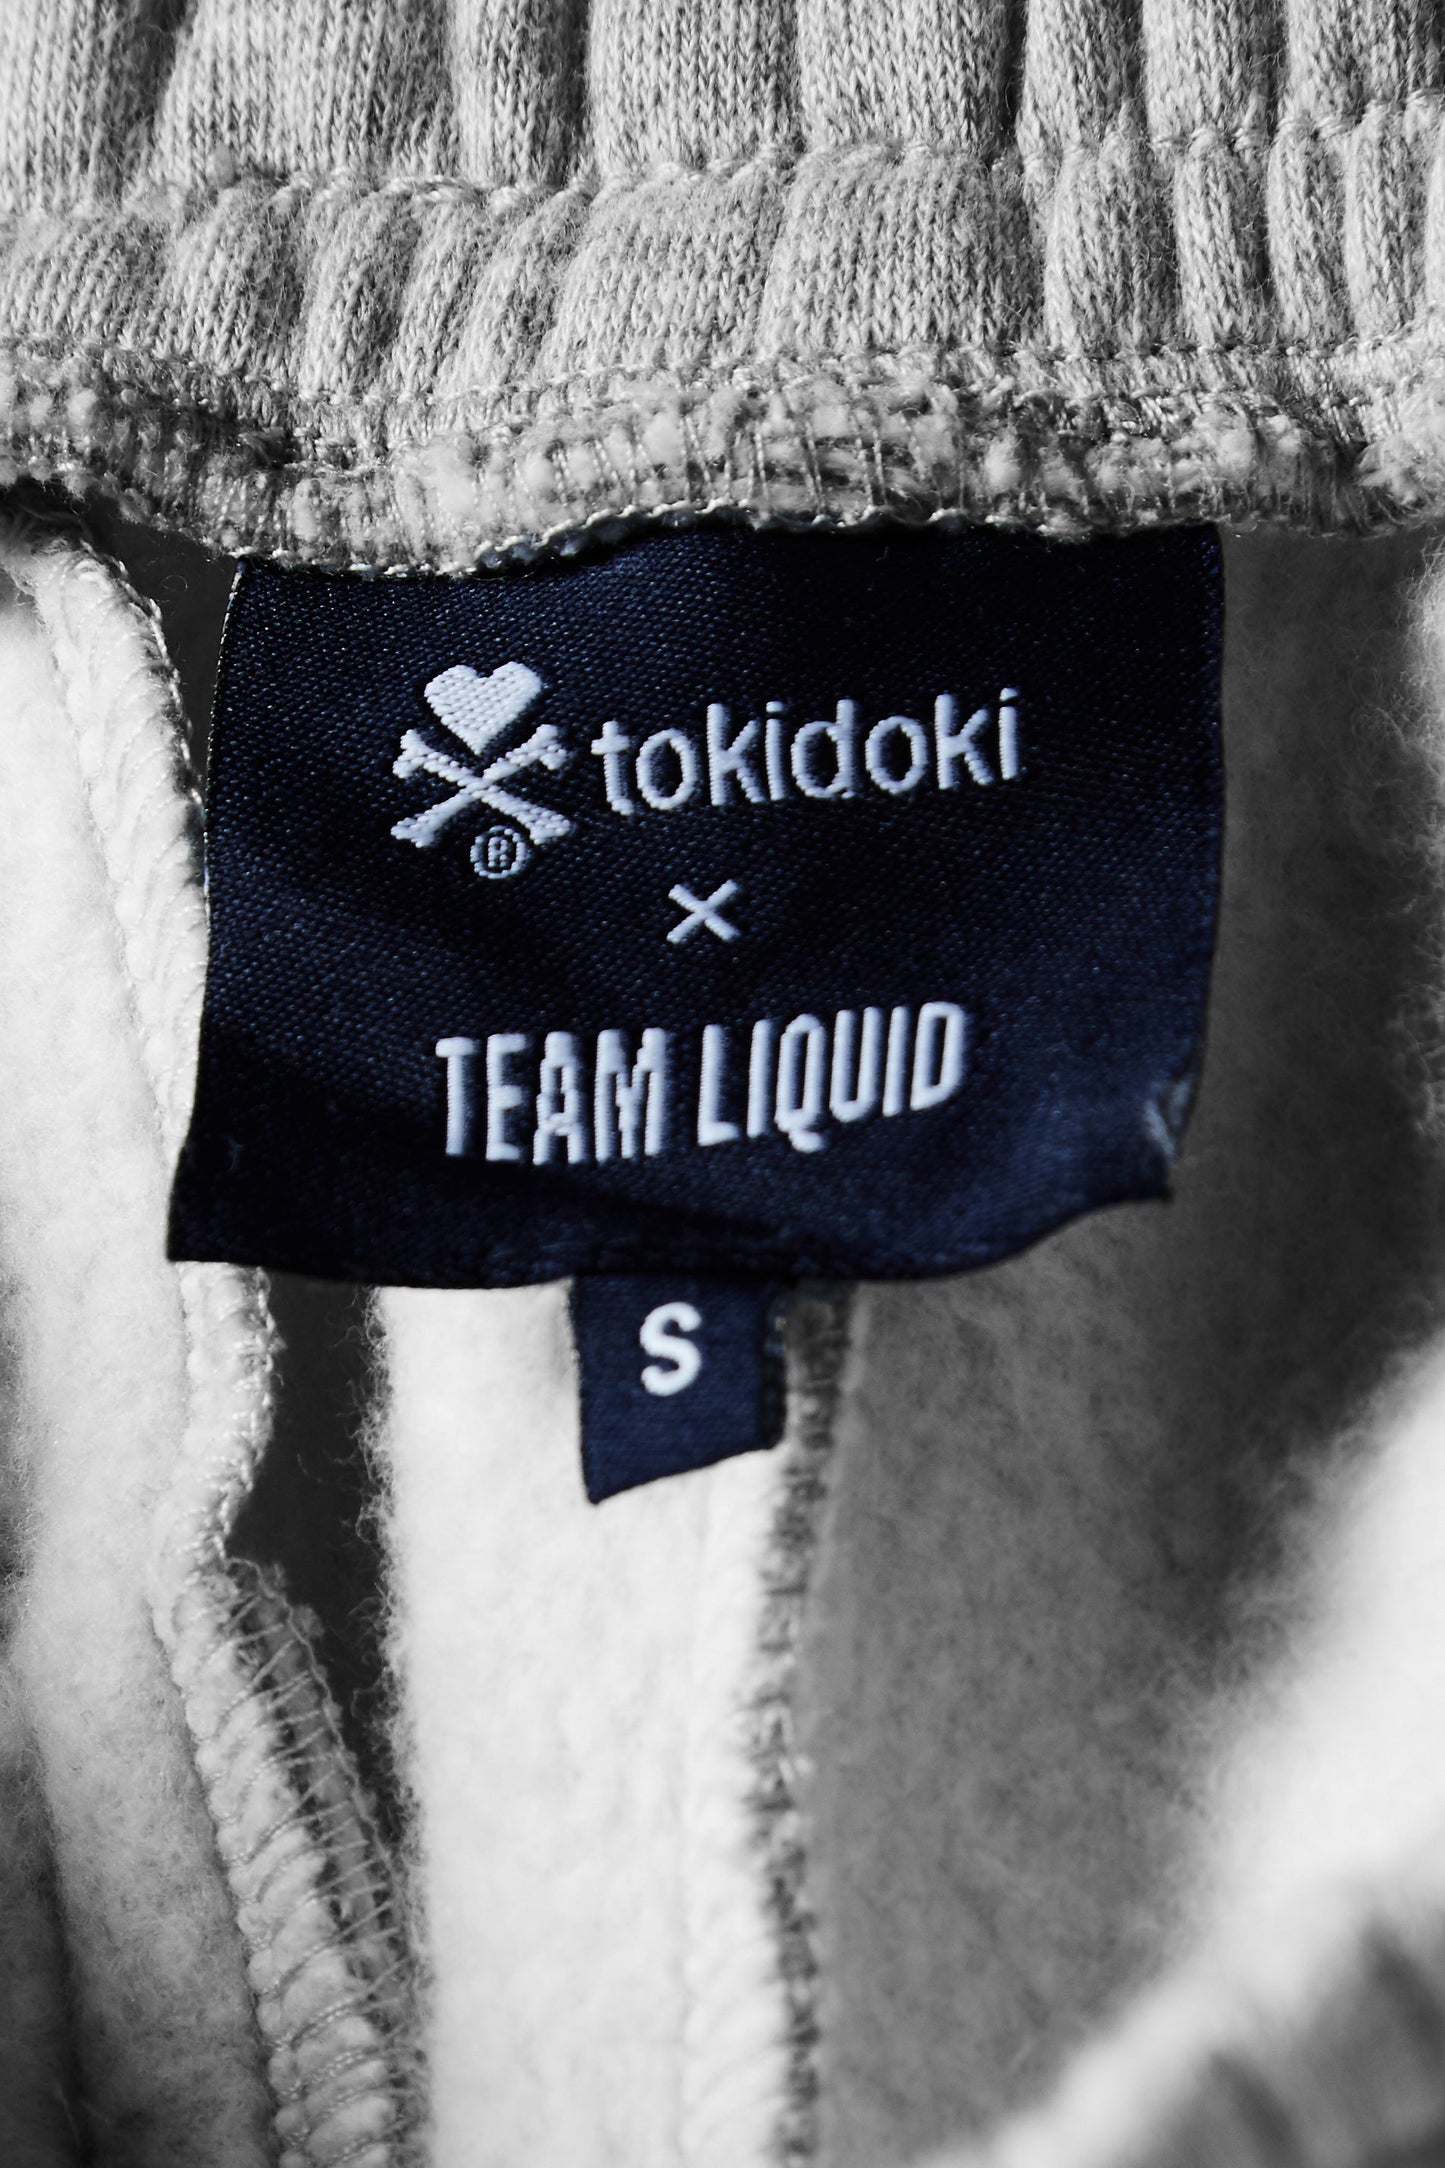 TOKIDOKI x LIQUID DRAGON GAMERS SWEATPANTS - GREY HEATHER - Team Liquid